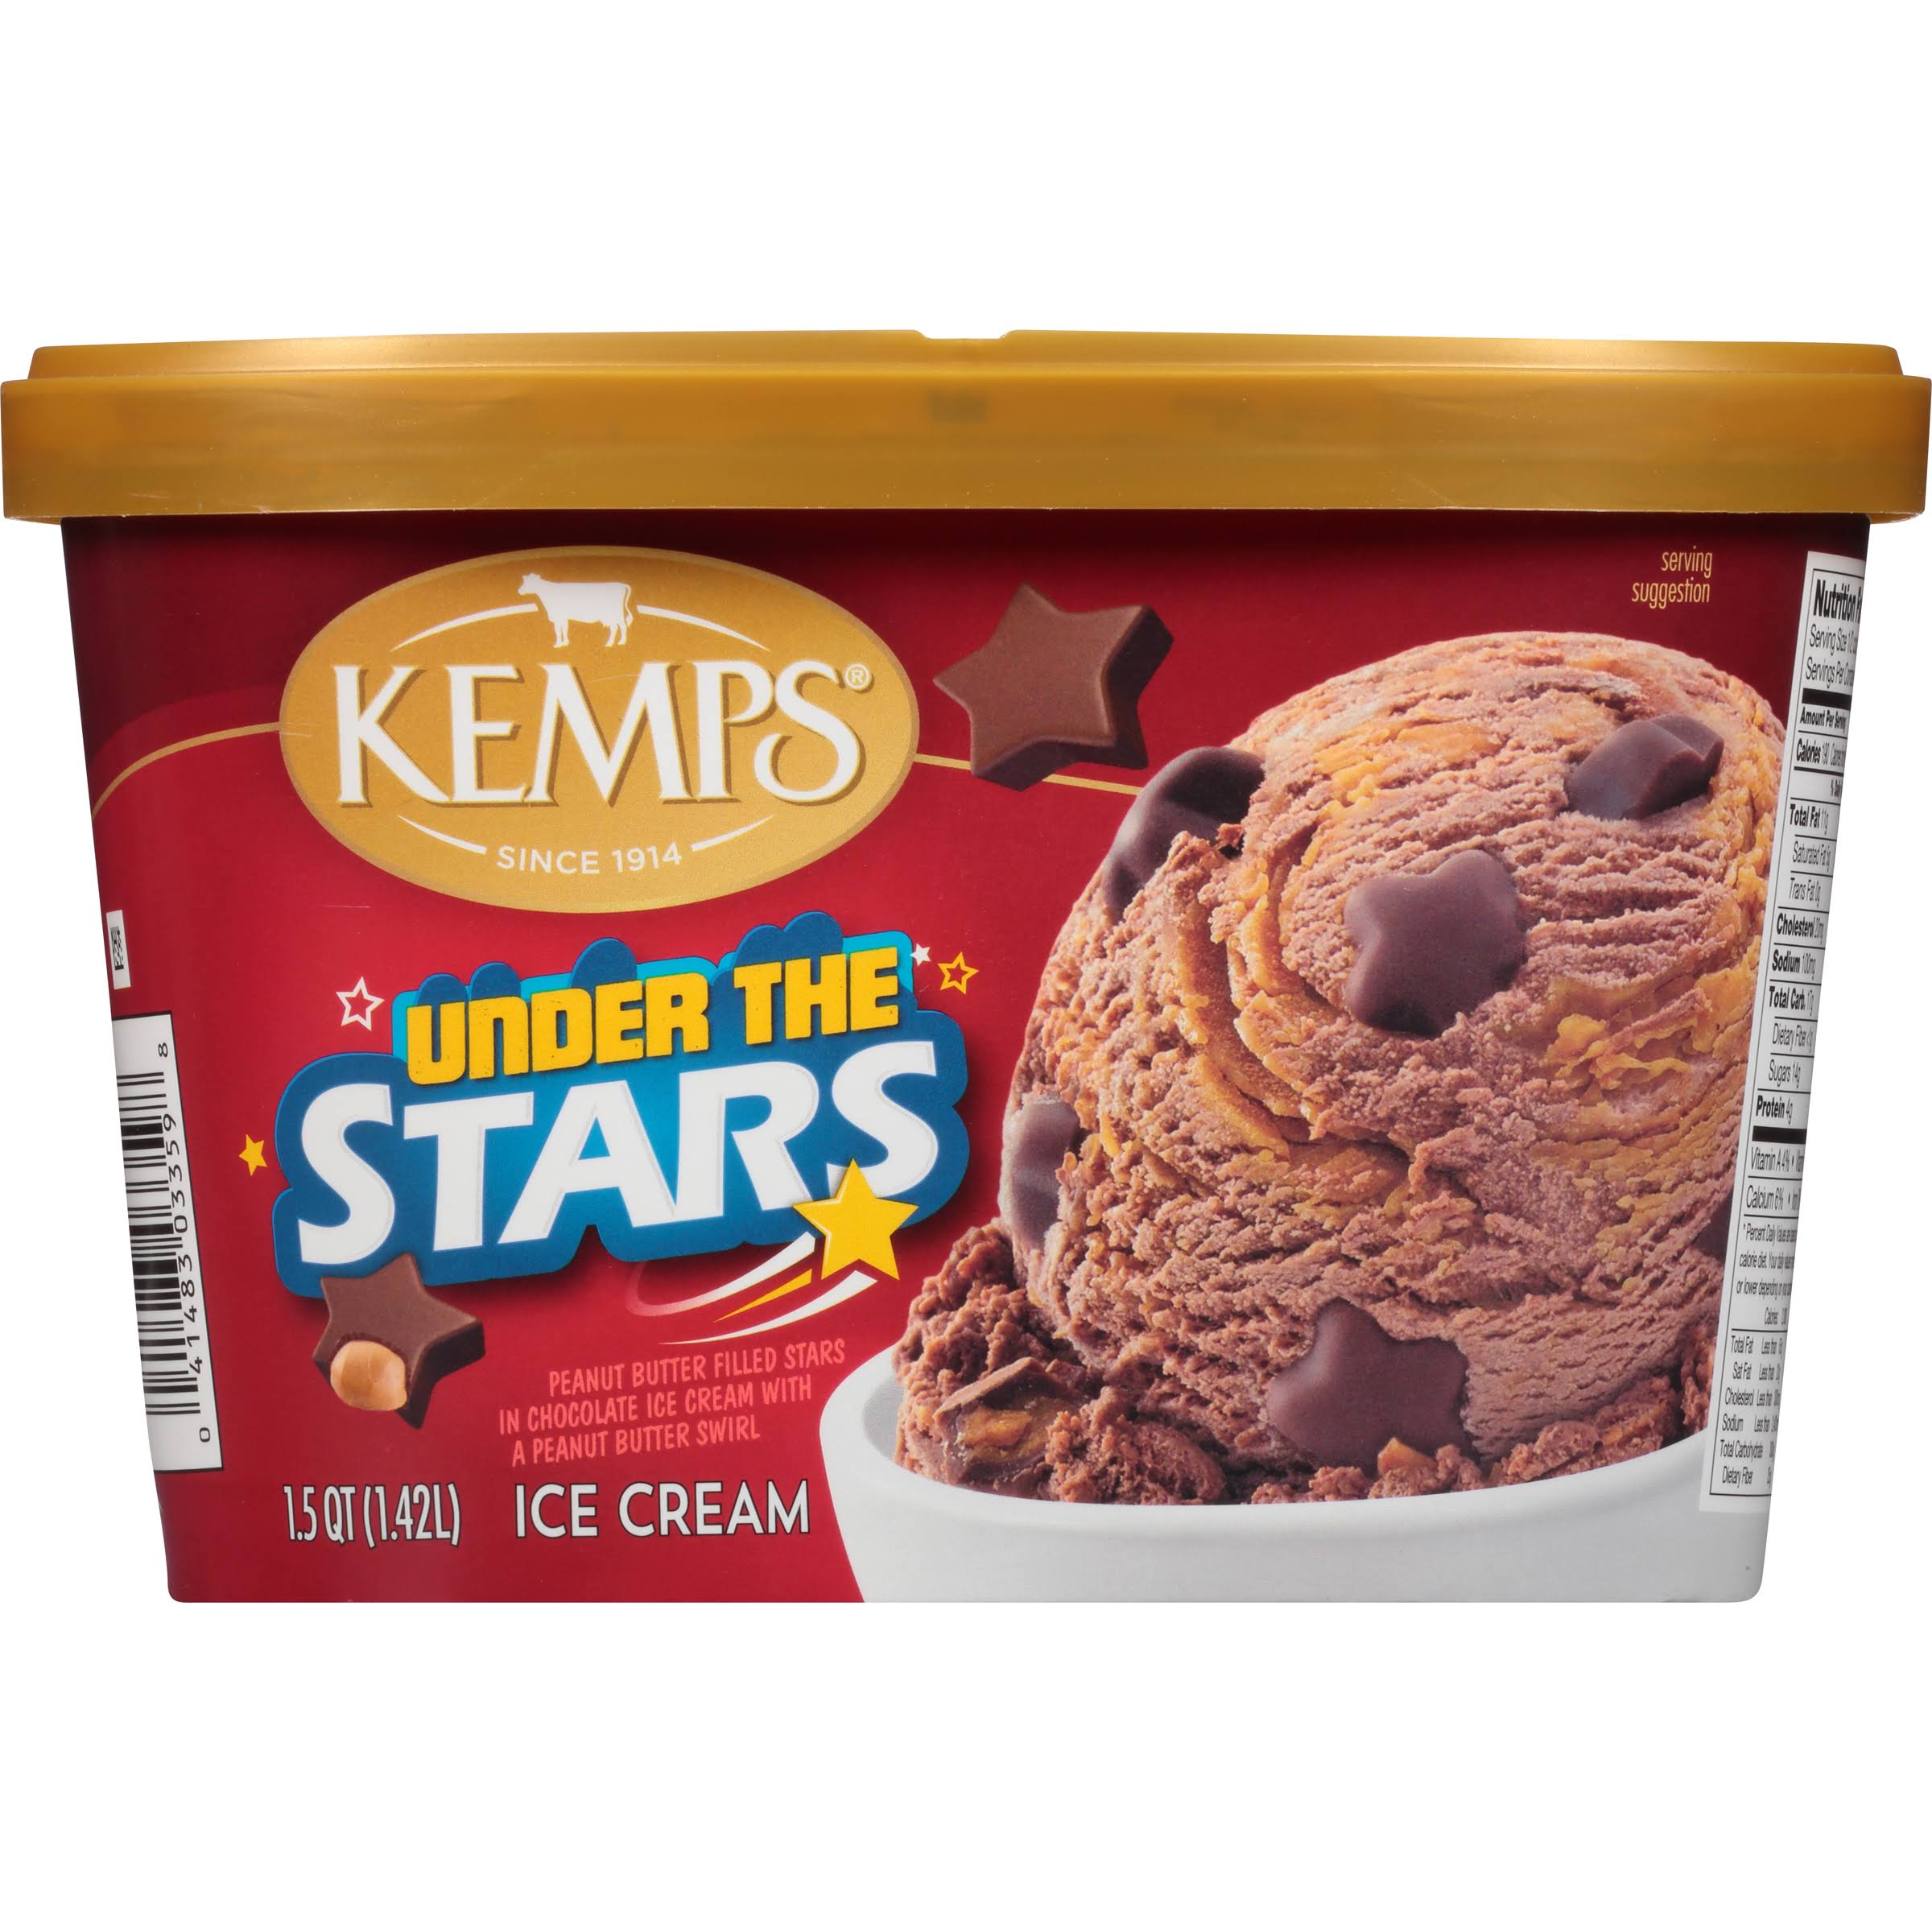 Kemps Ice Cream, Under the Stars - 1.5 qt